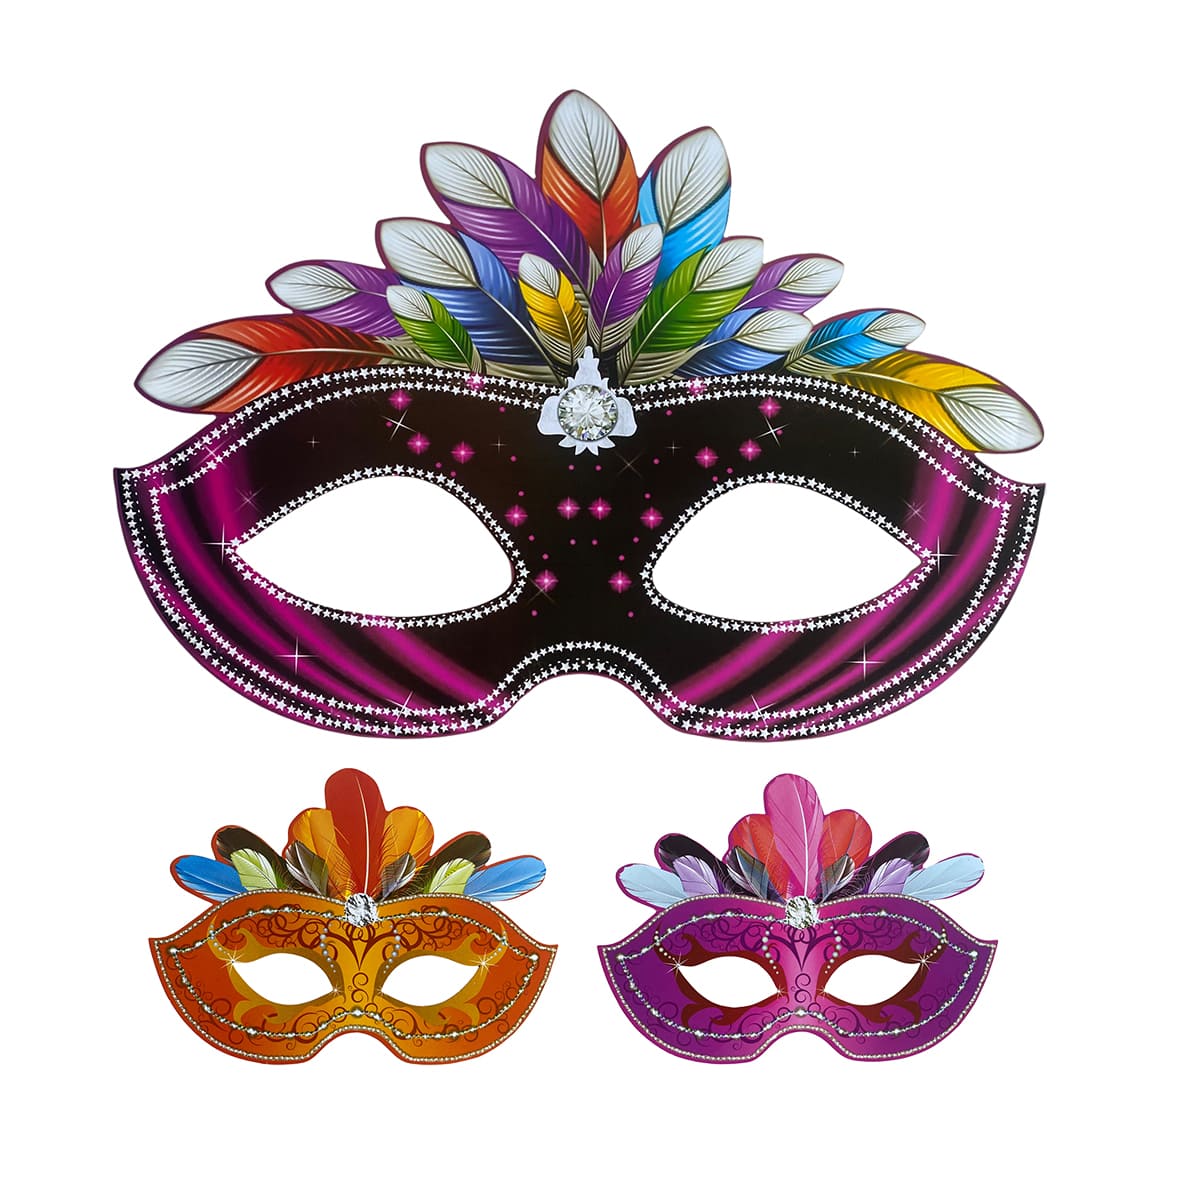 Painel Máscara Carnaval Papel Cartonado Kit com 3 (1 Grande e 2 Pequenas)